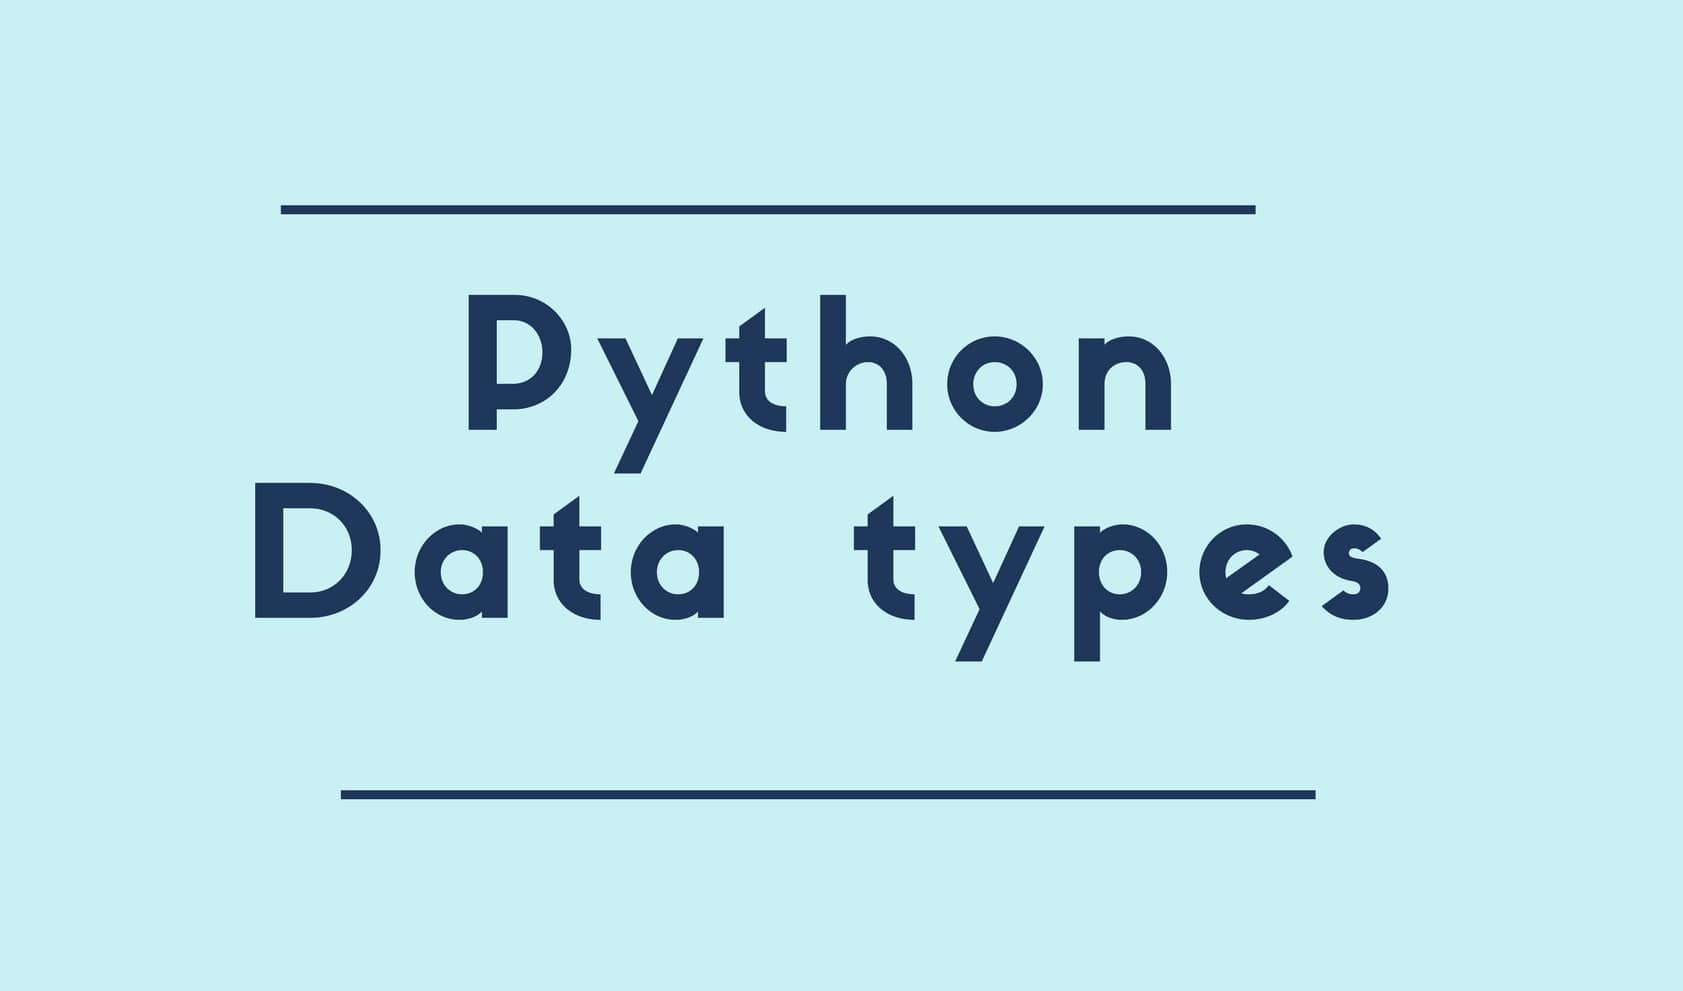 Exploring Data Types of python